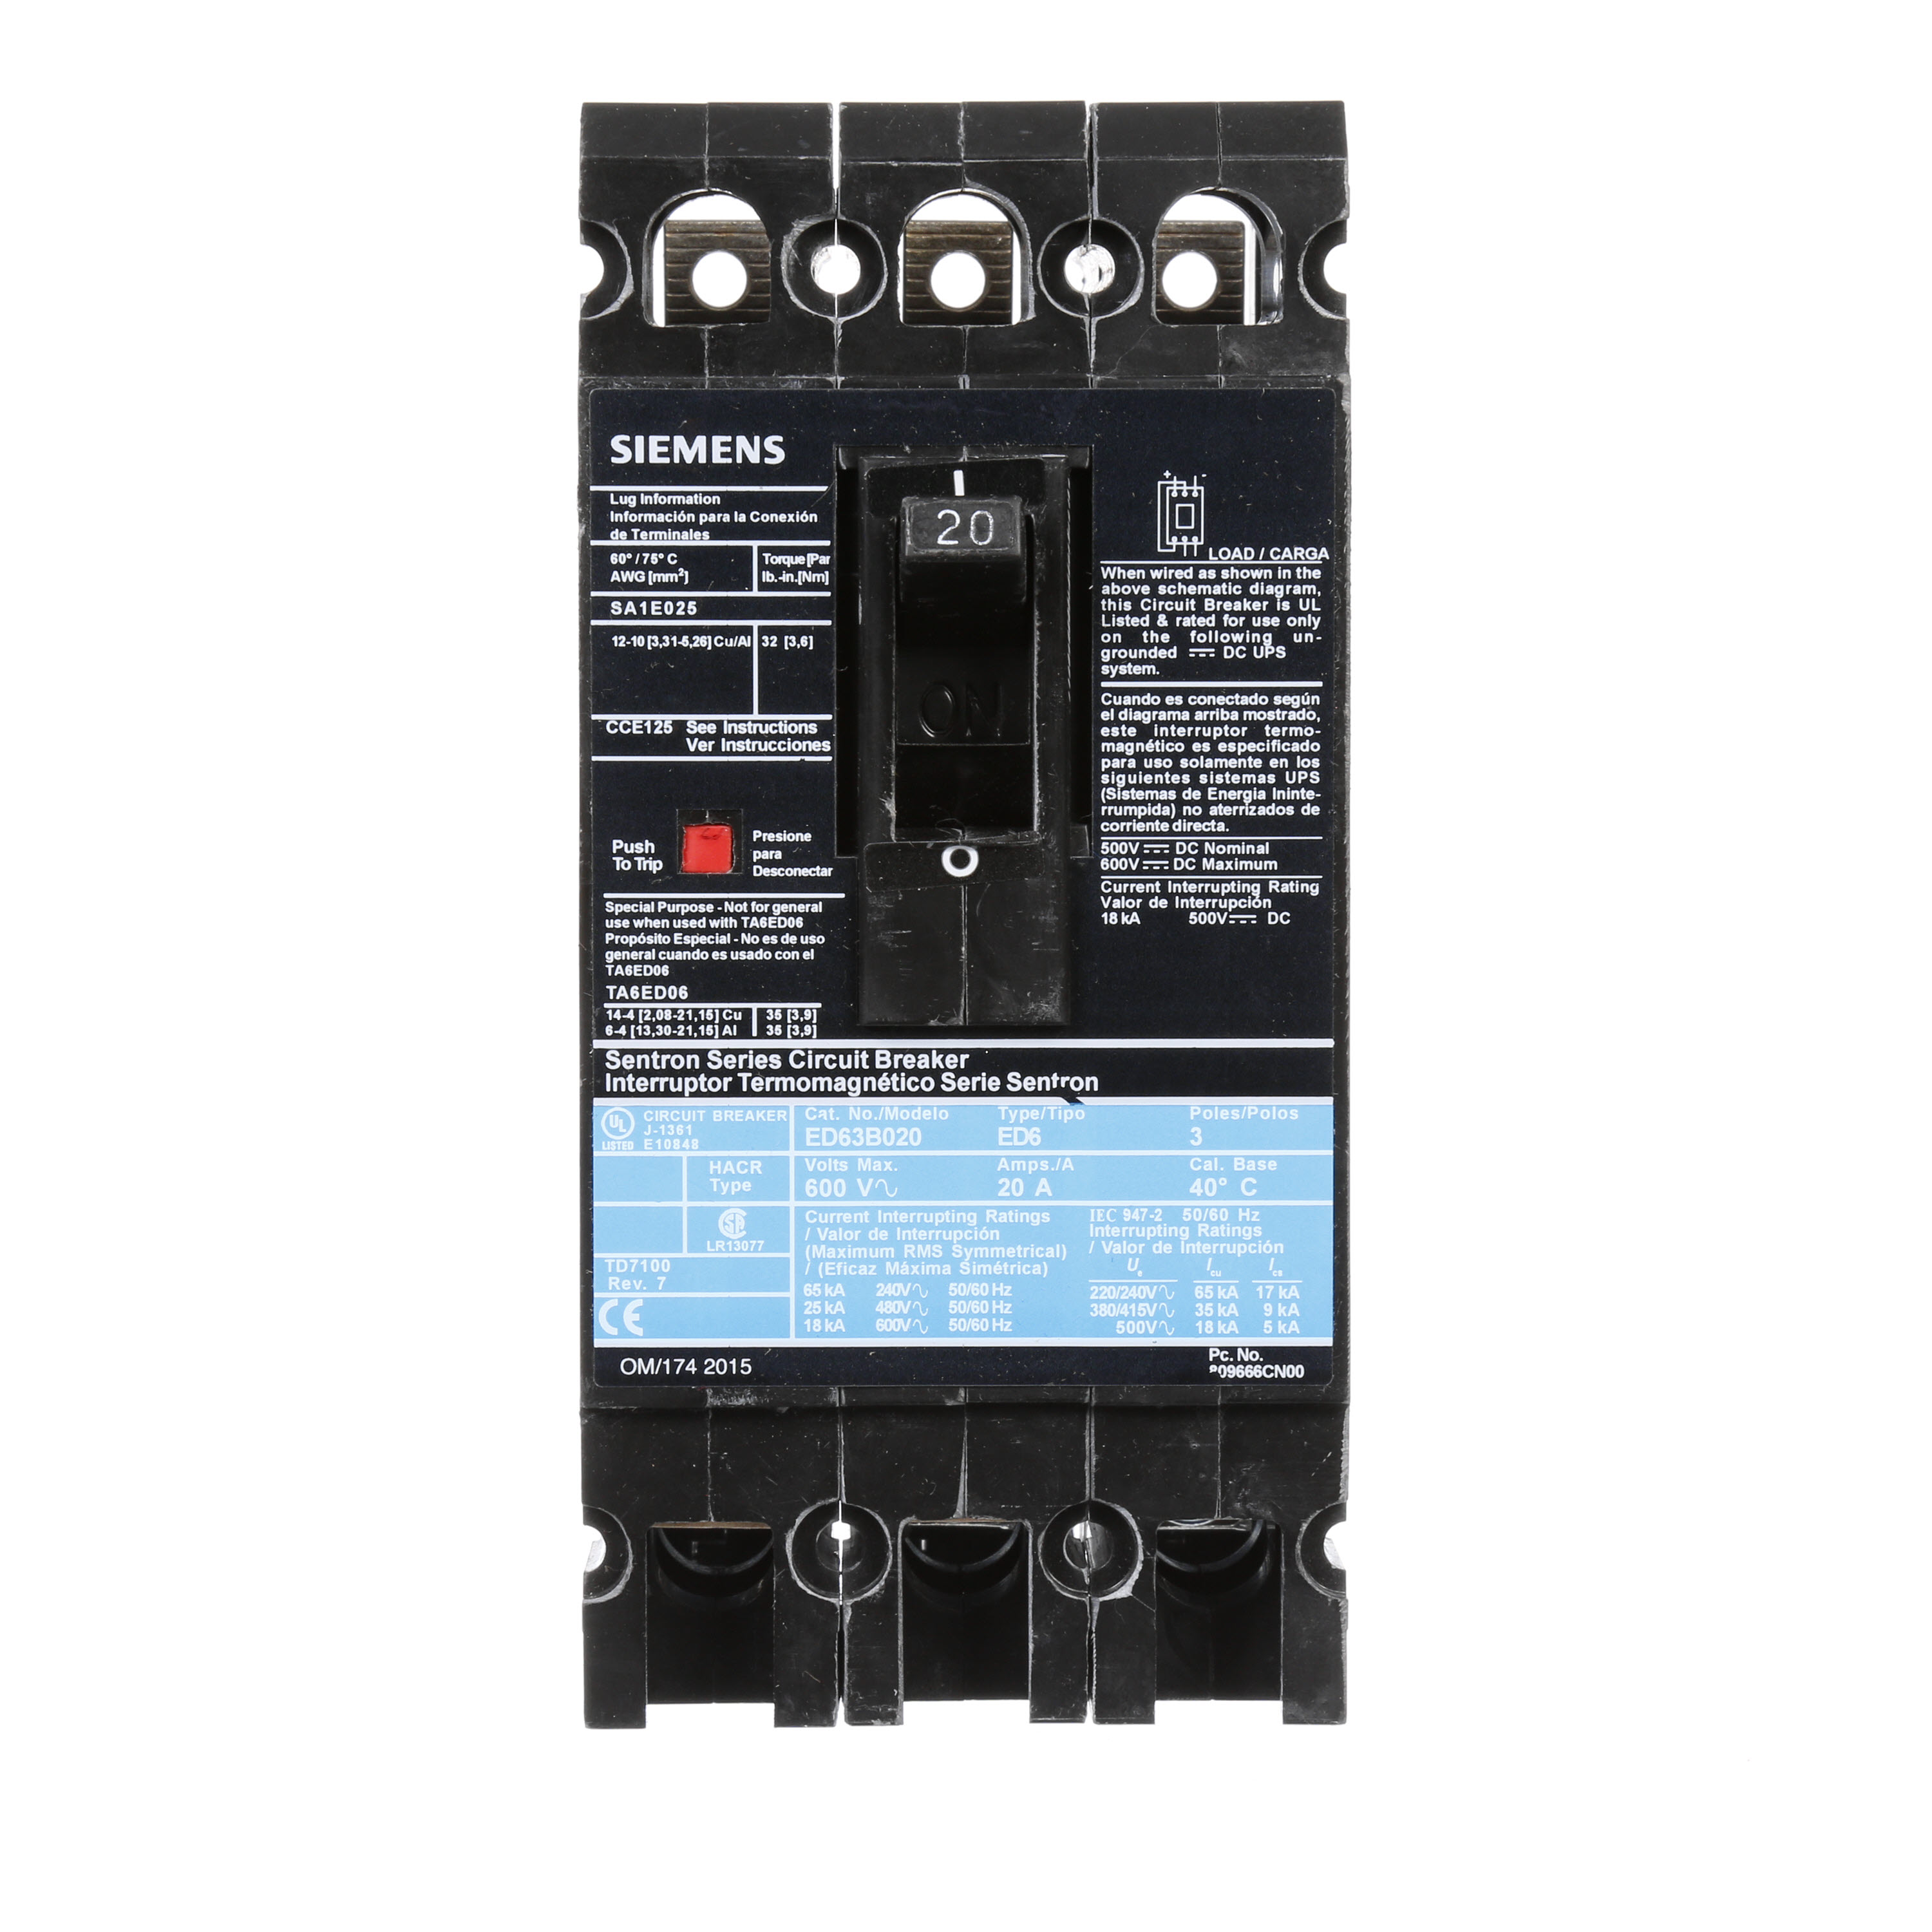 Siemens Circuit Breaker ED63B020 20 Amp 600 Volt 3 Pole 